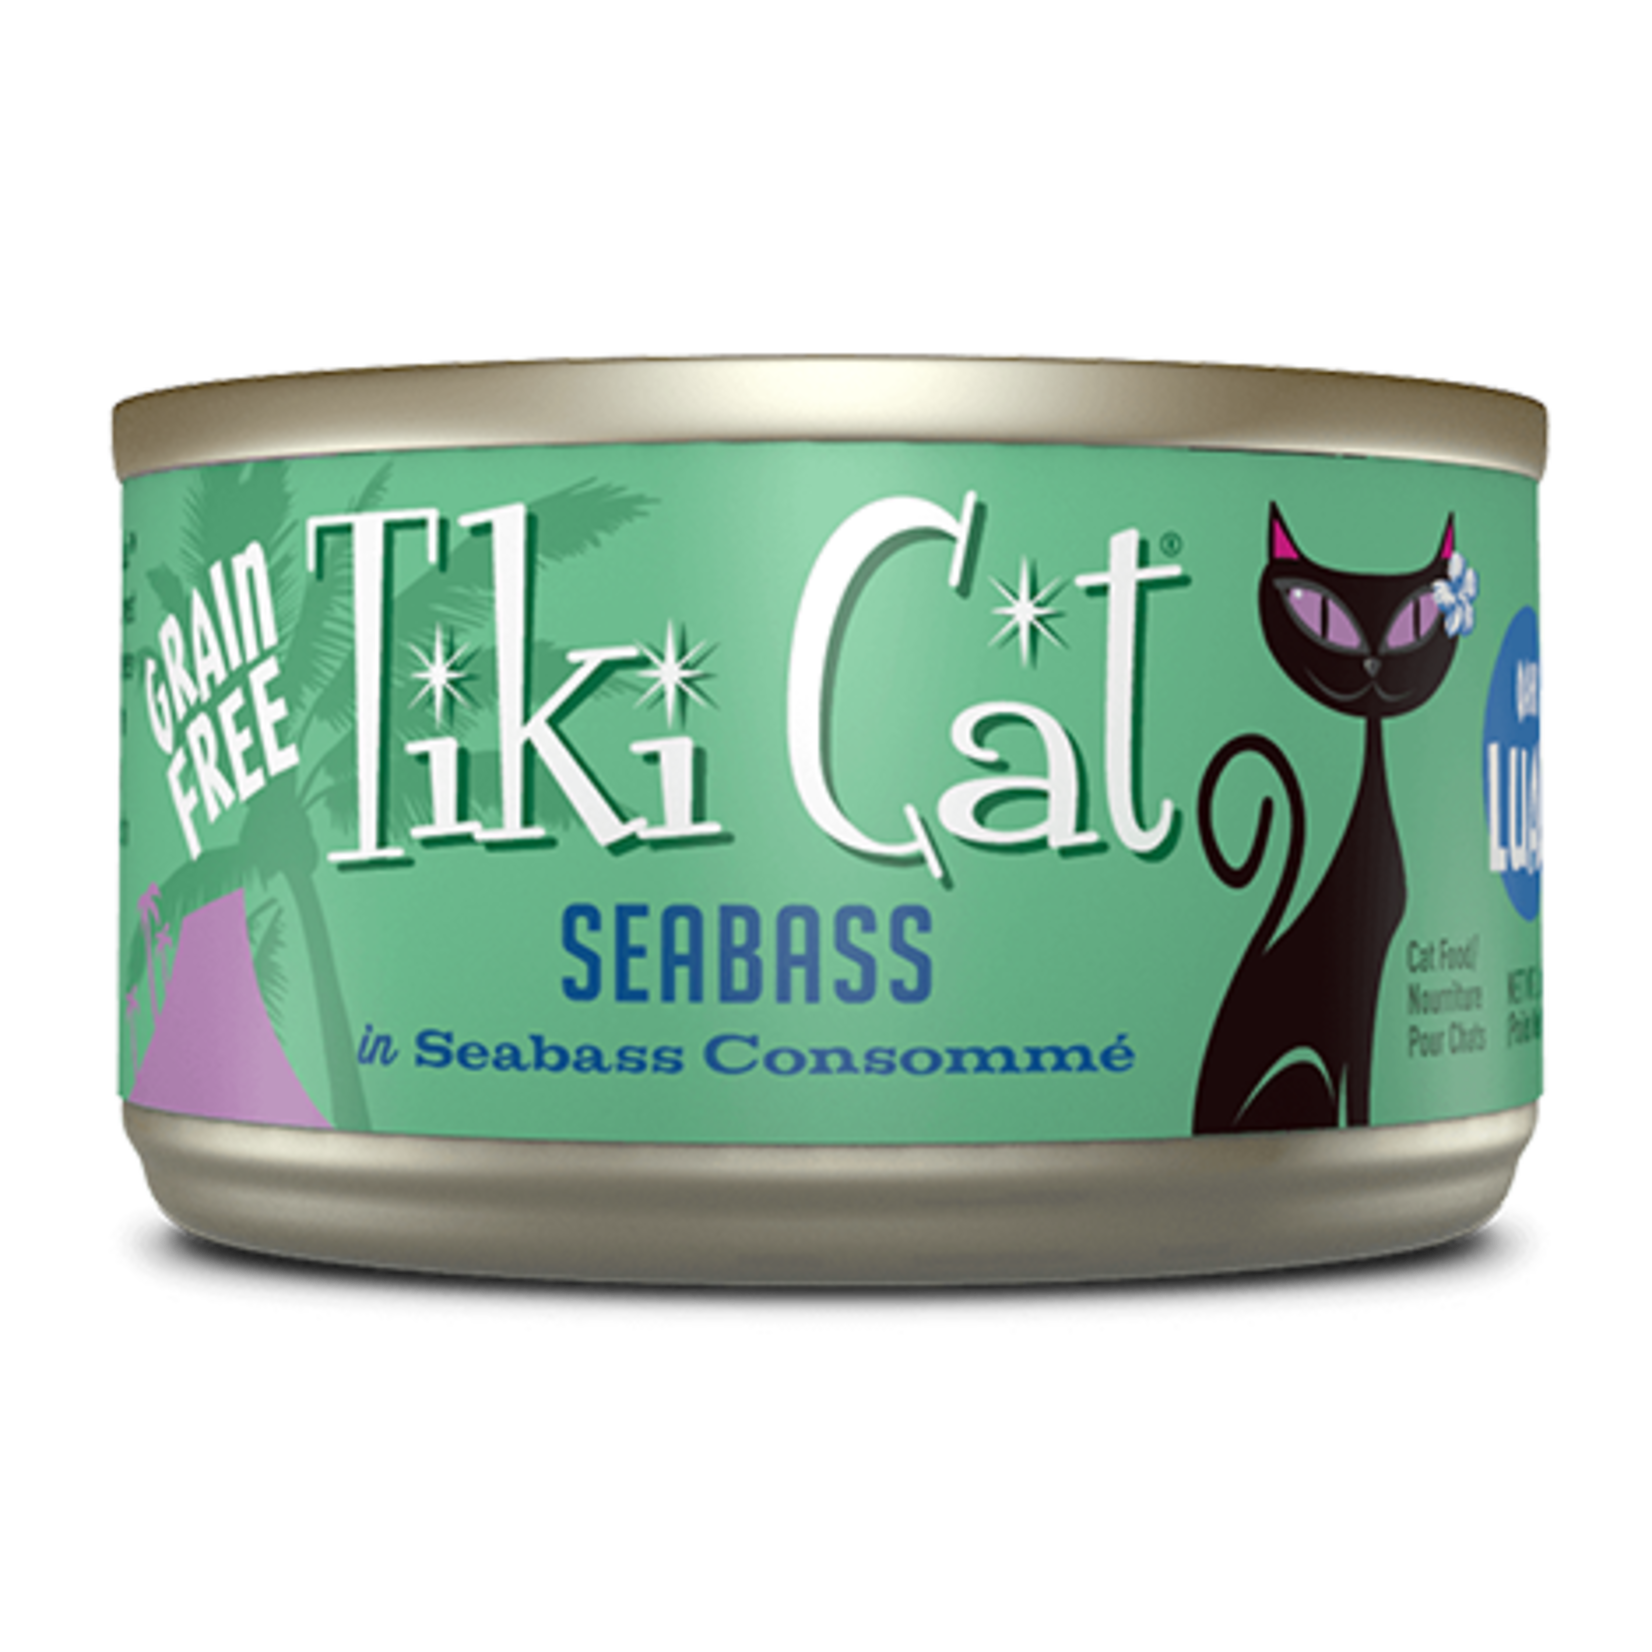 Tiki Cat & Tiki Dog Tiki Cat Luau Oahu Seabass Canned Cat Food 2.8oz